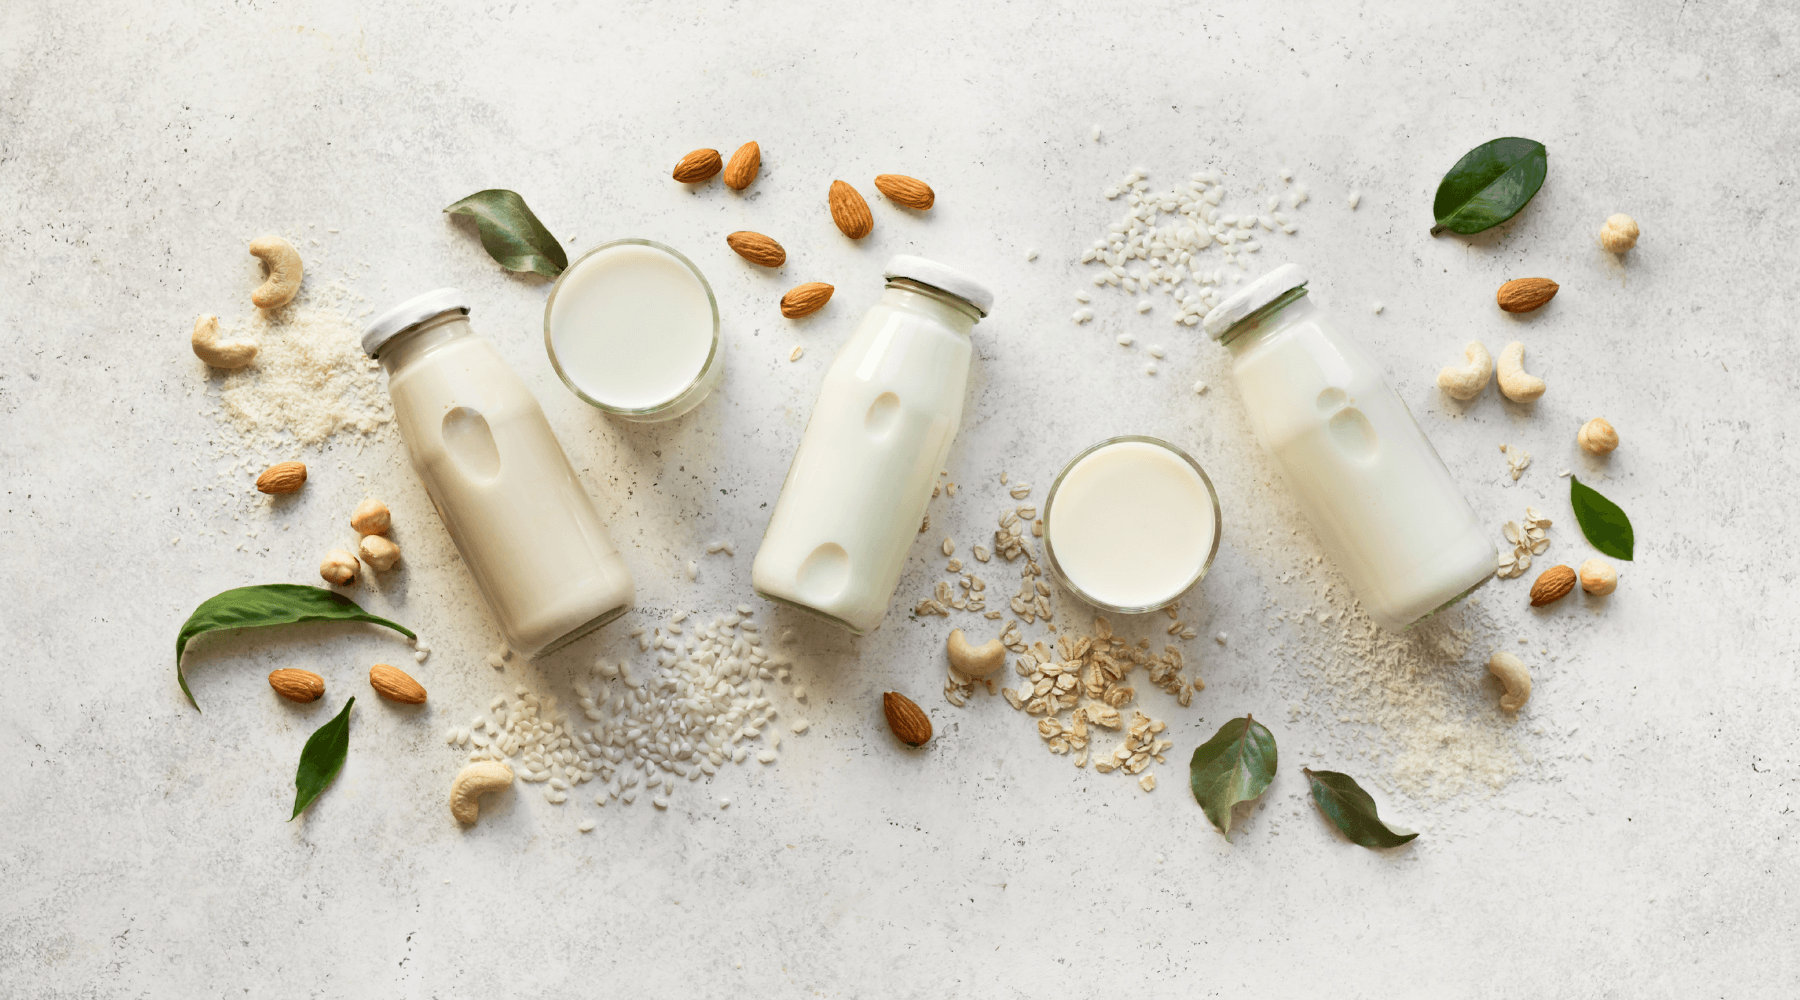 Plant Based Milk: A Healthier Alternative to Dairy